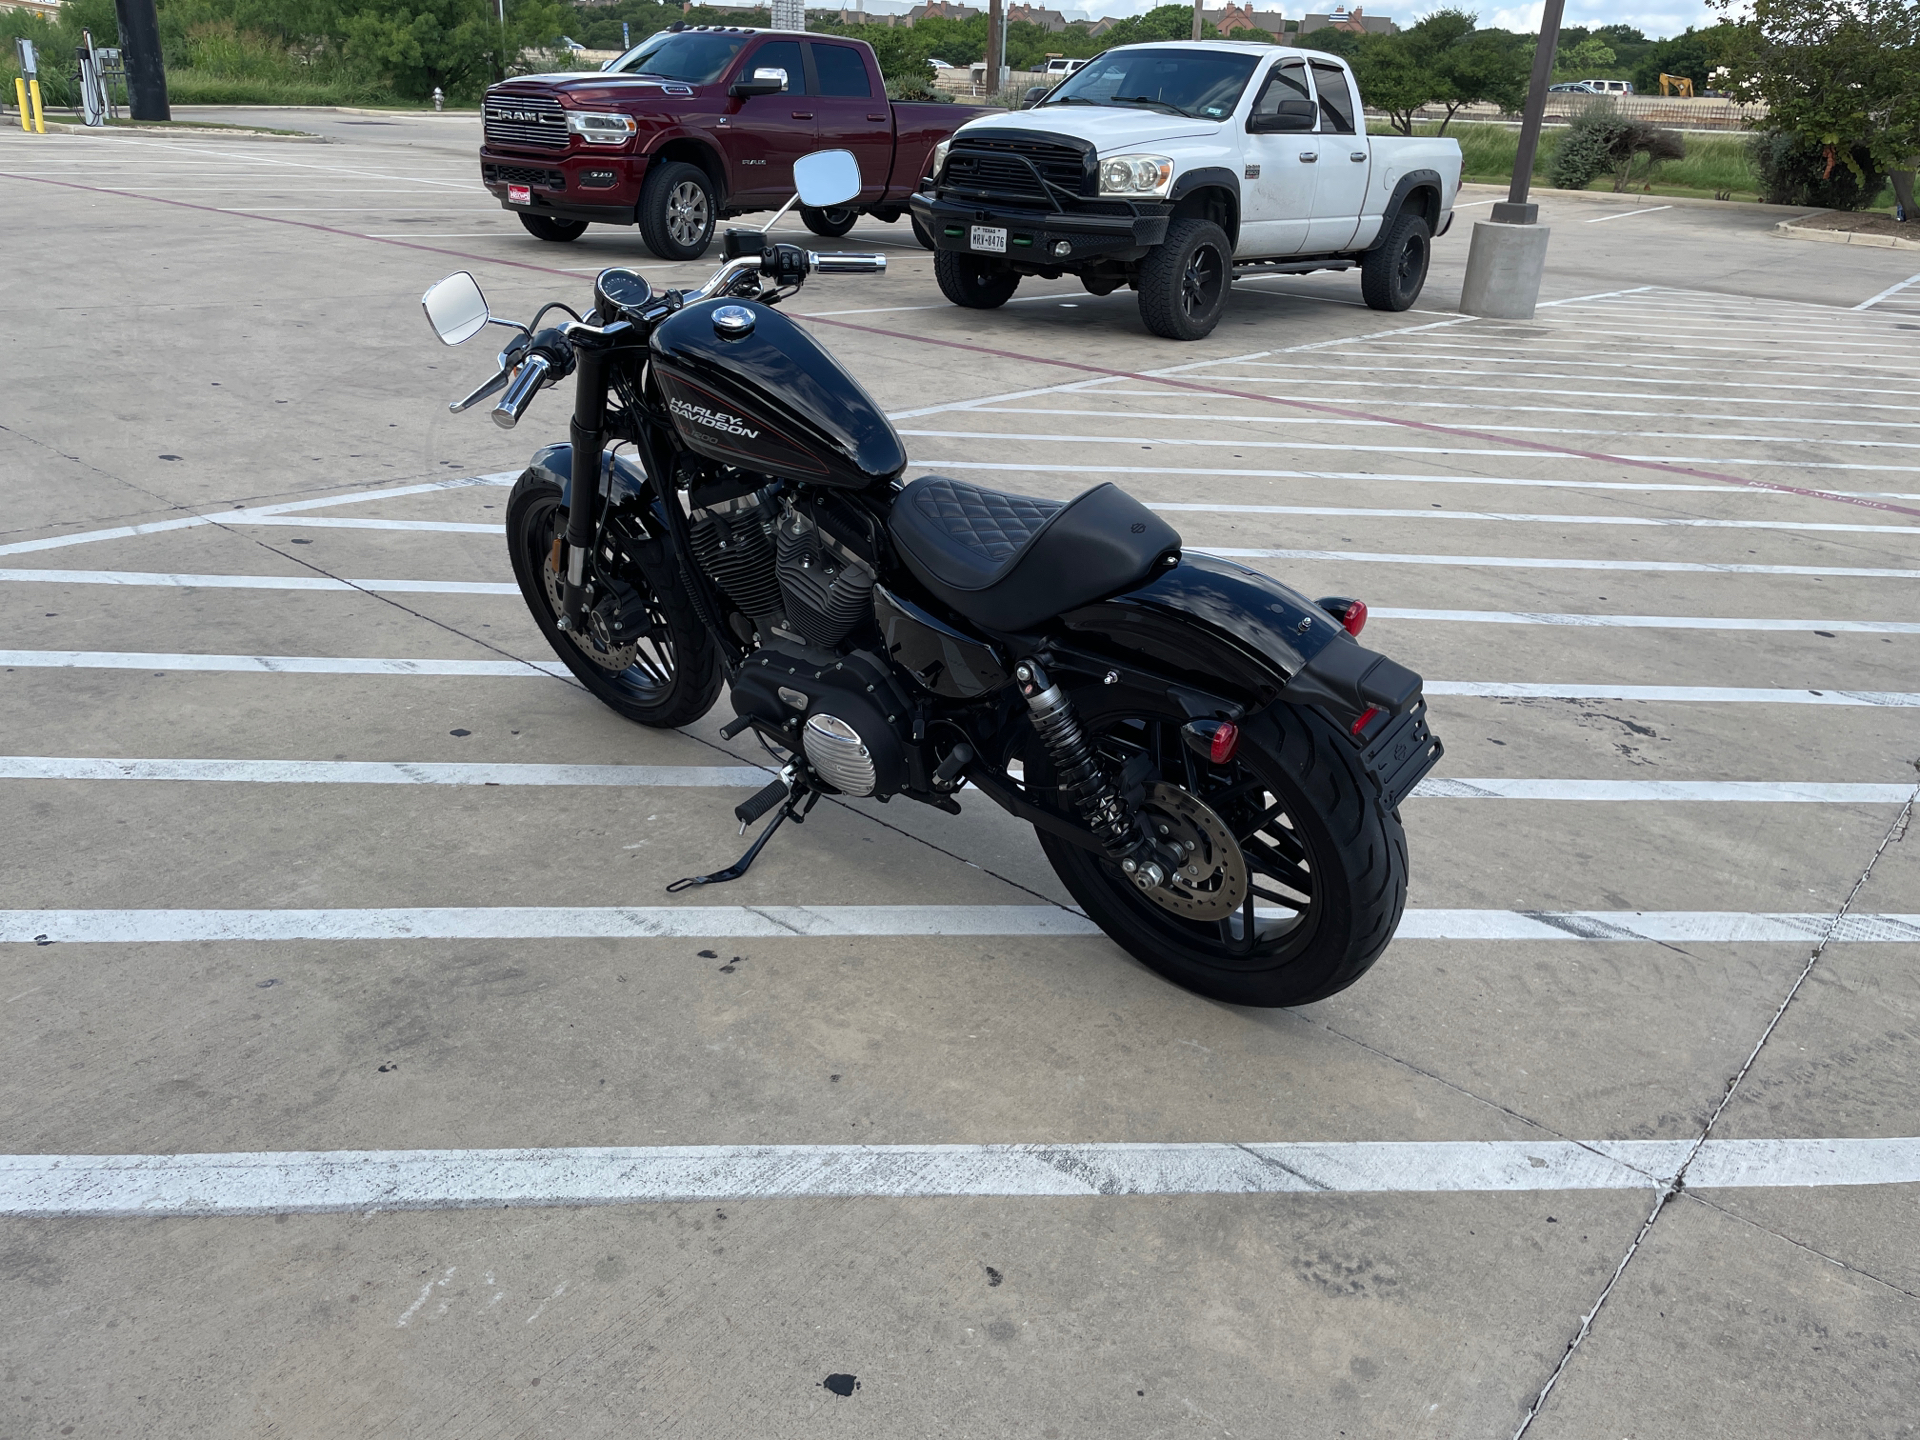 2019 Harley-Davidson Roadster™ in San Antonio, Texas - Photo 6